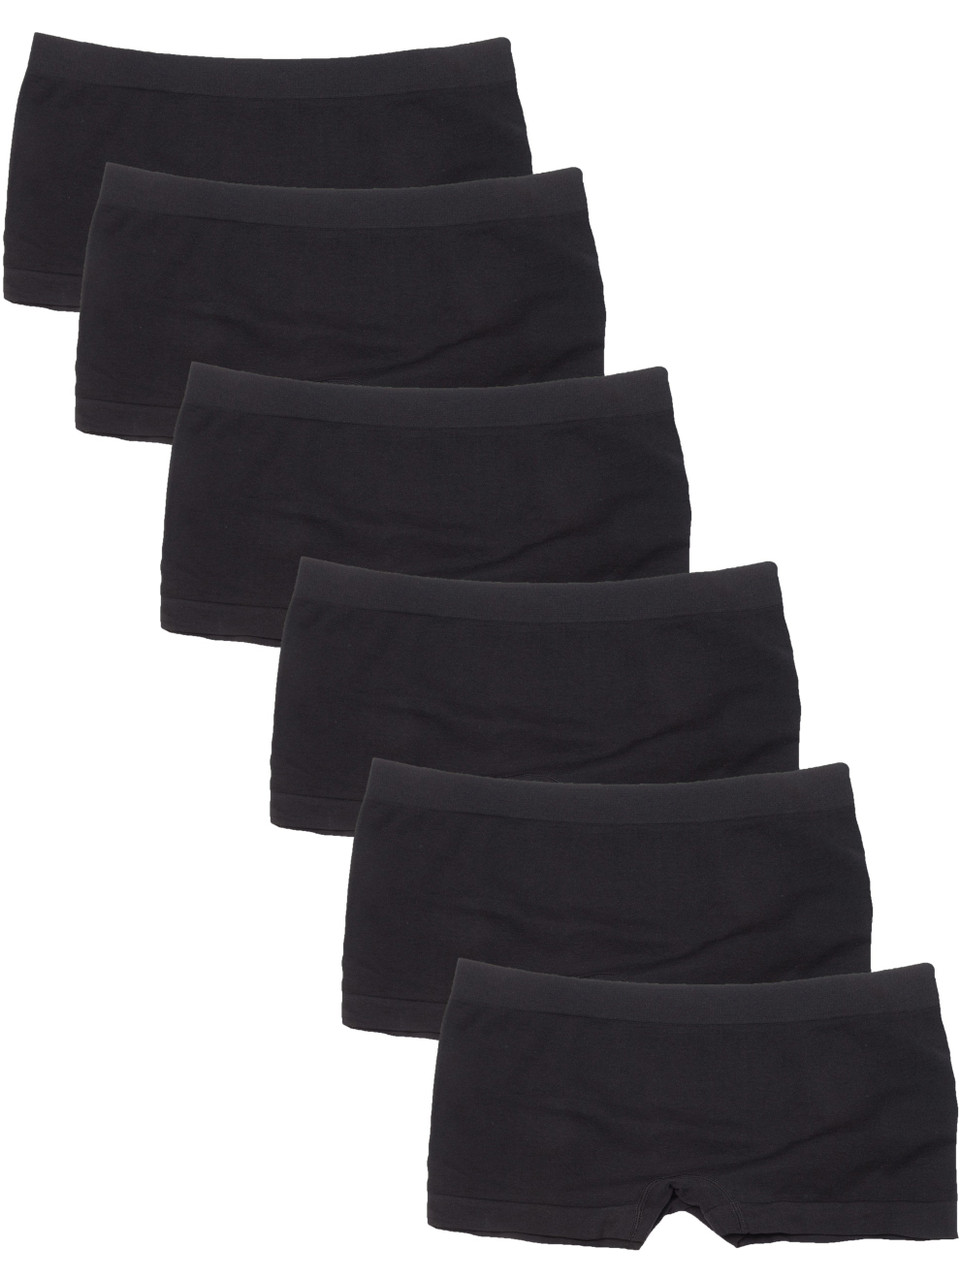 90% Nylon & 10% Spandex Black Color Boy Short Panties at Rs 70/set in Surat